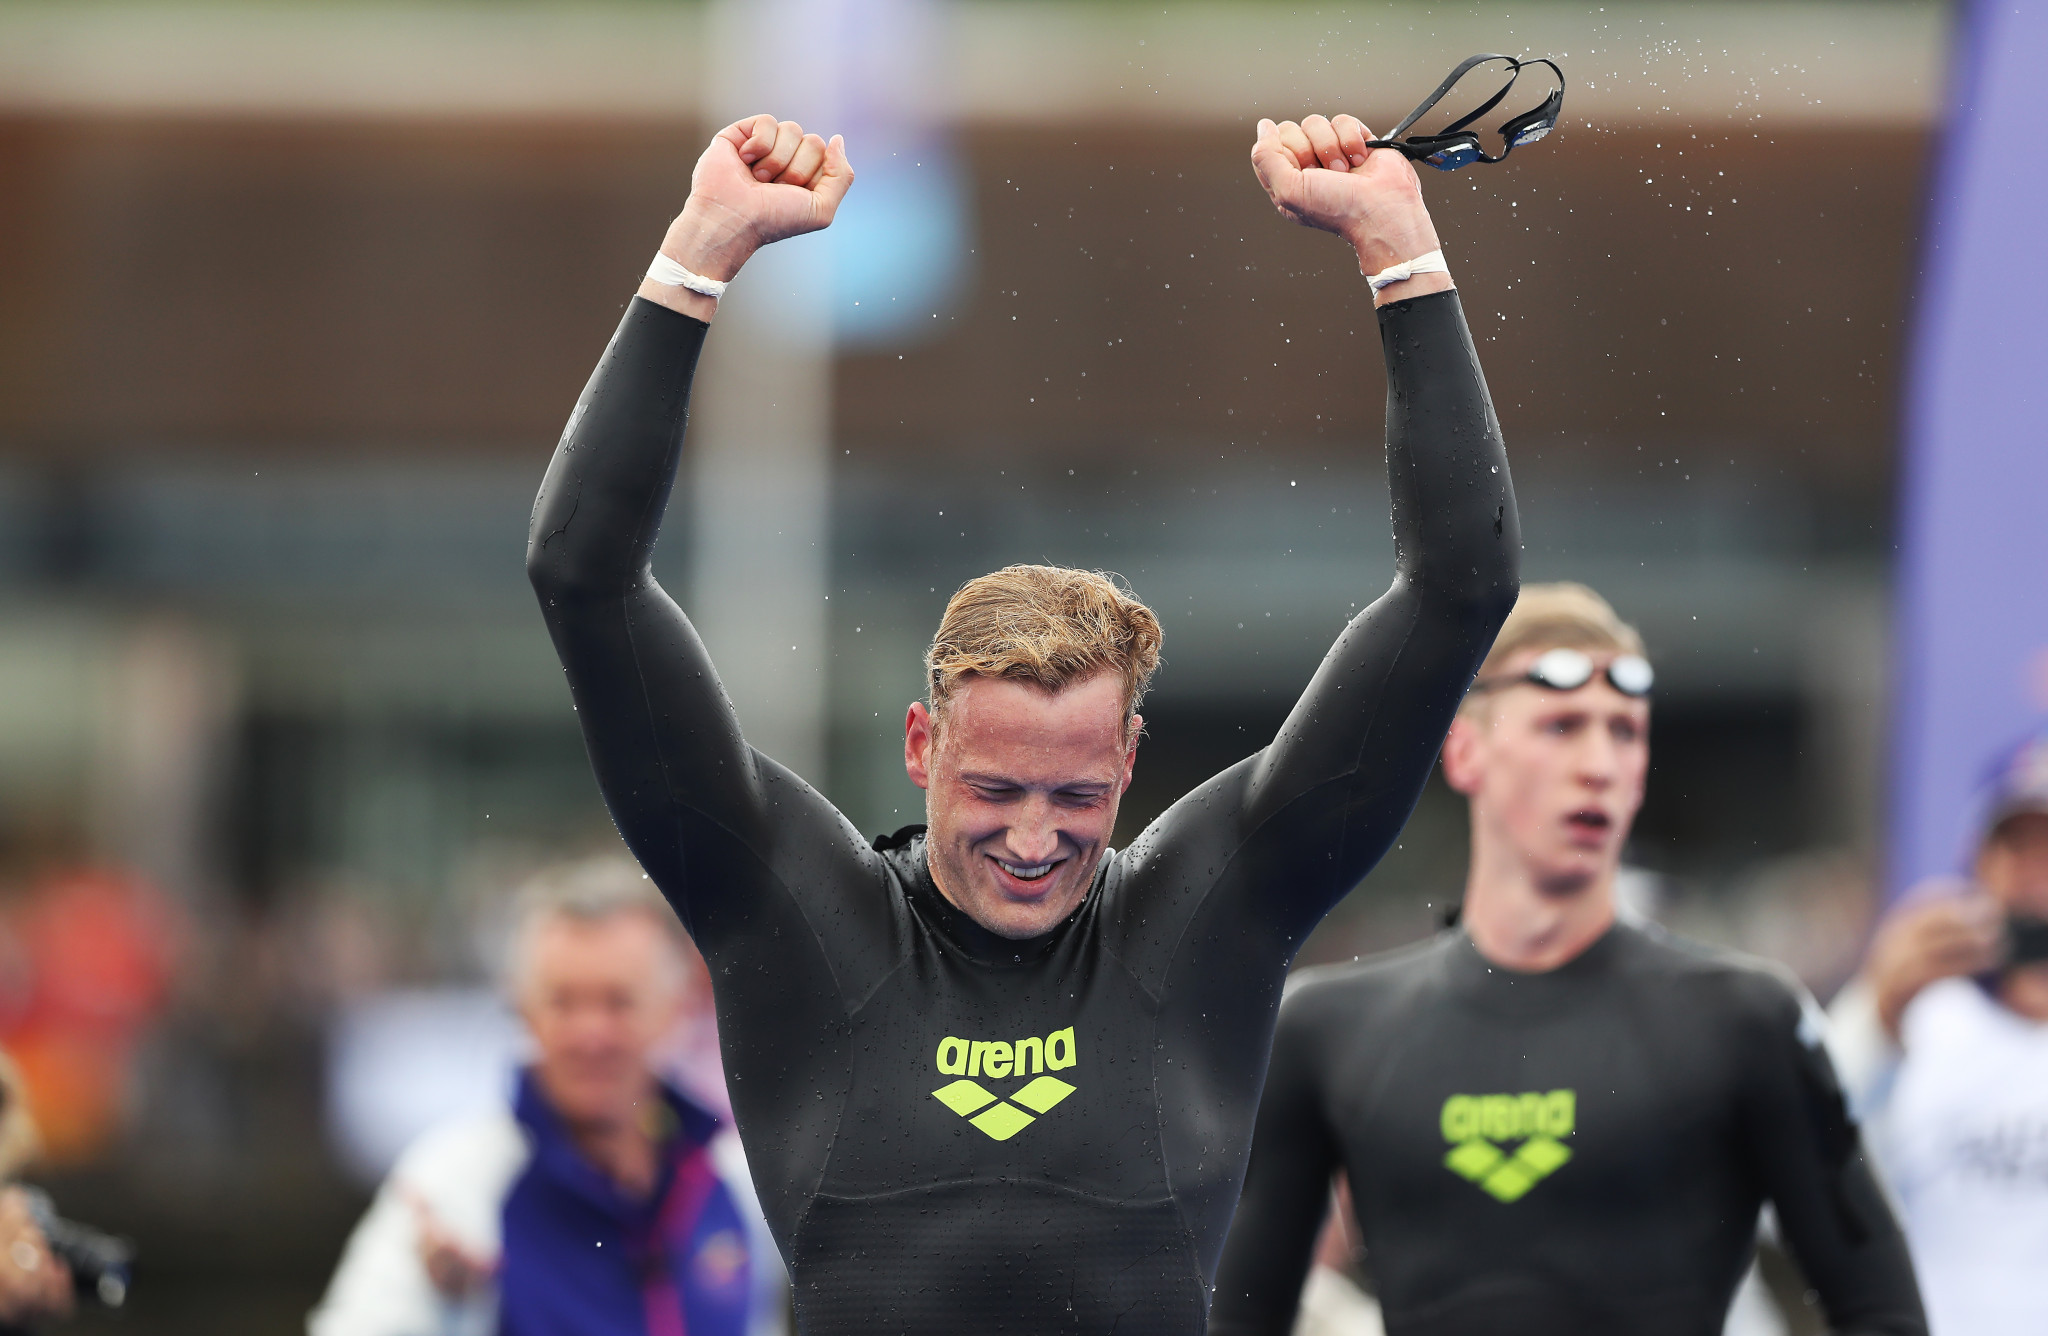 Weertman aims to defend men's Olympic marathon swimming title